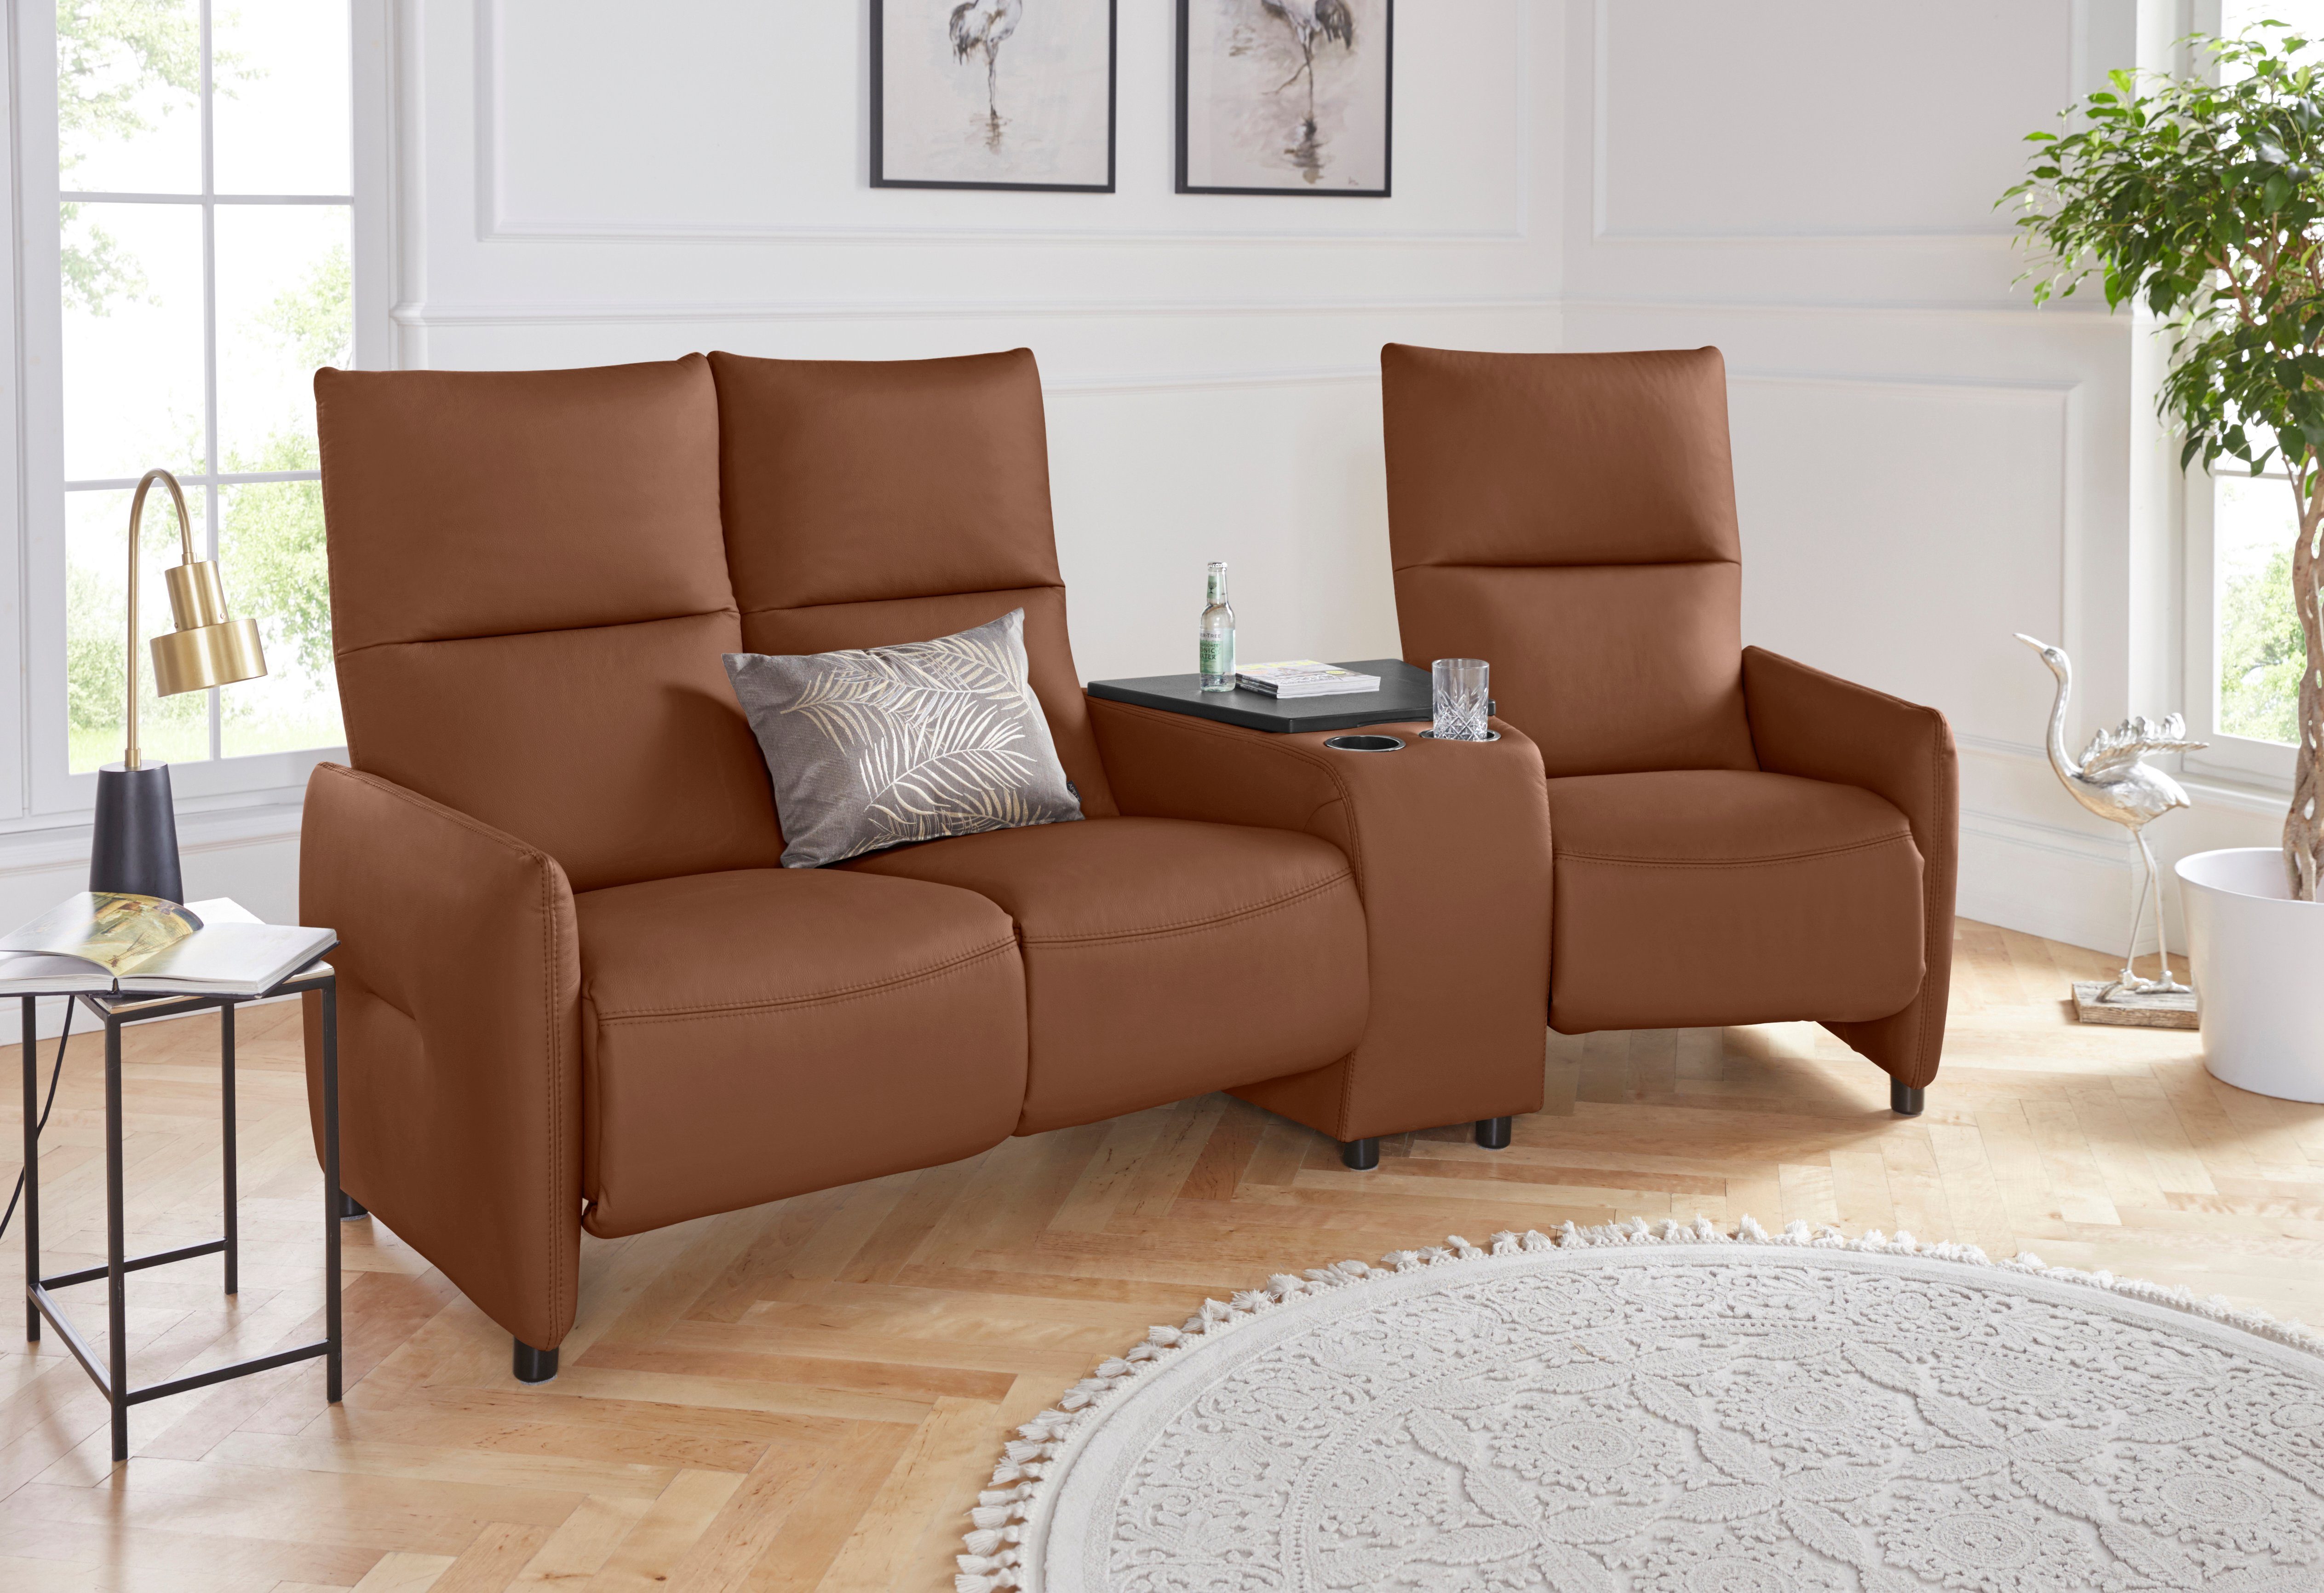 exxpo - sofa fashion 3-zitsbank Inclusief relaxfunctie en vak